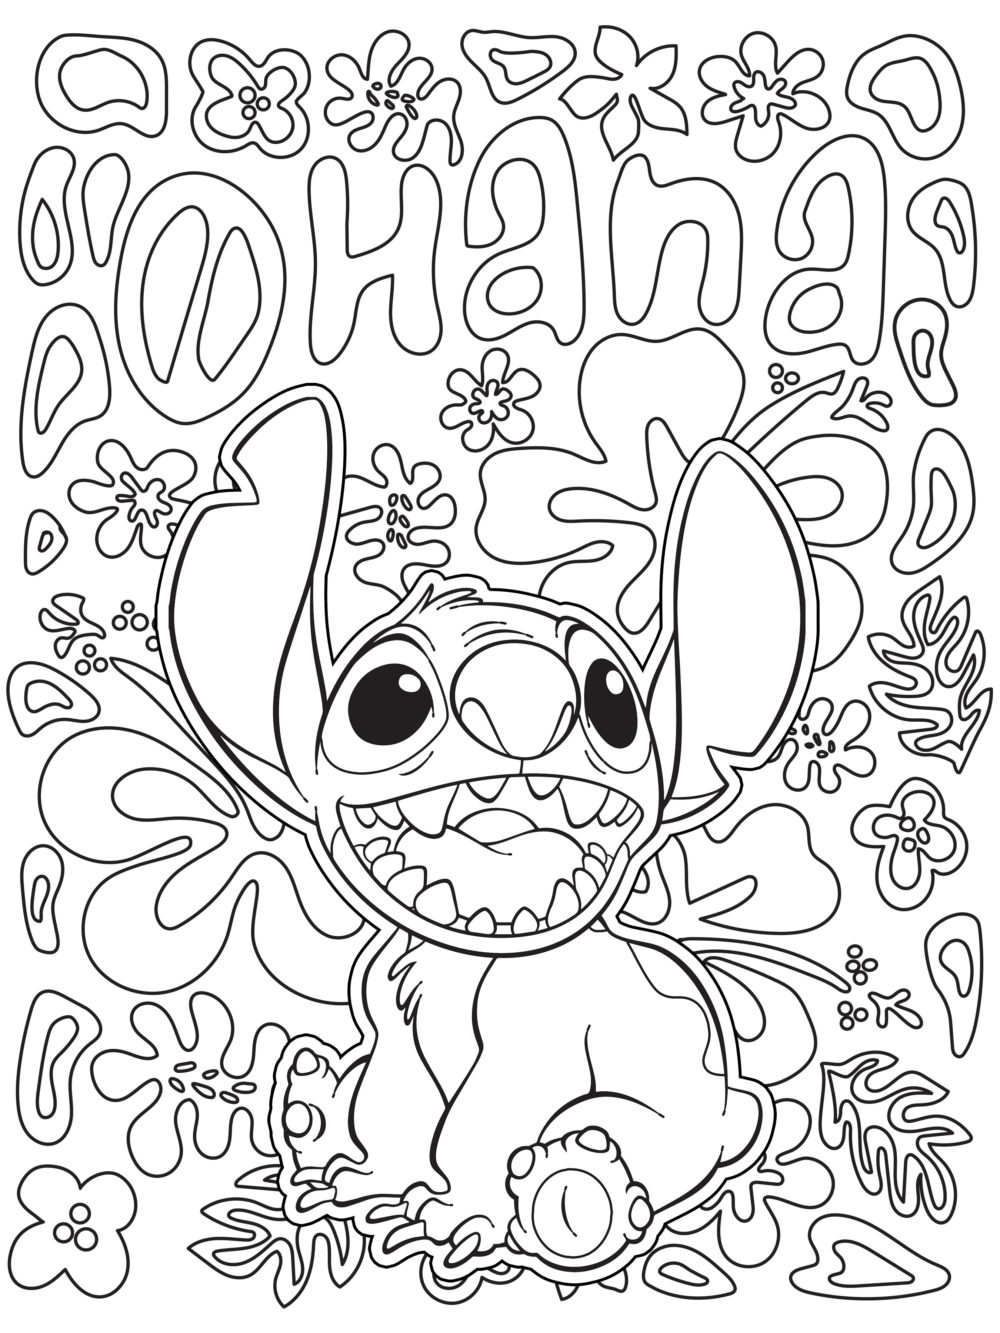 Lilo and Stitch Coloring Page   Lilo & Stitch Photo 39819690   Fanpop